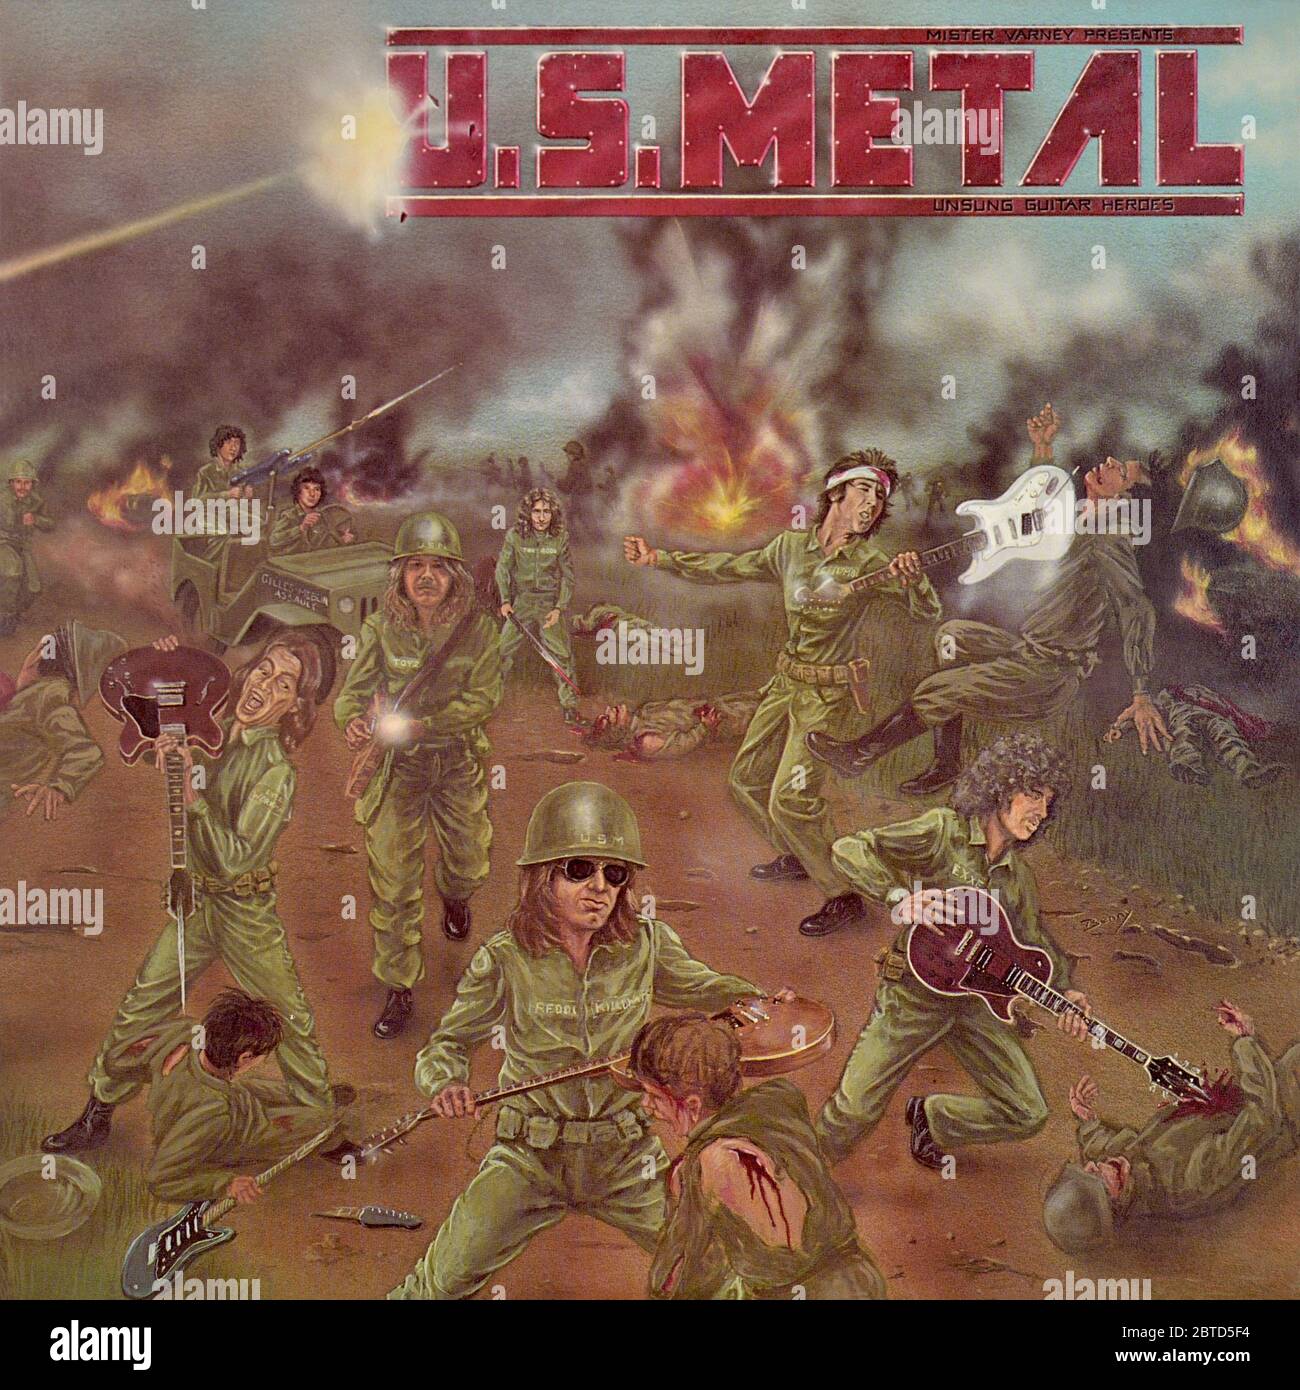 U.S. Metal - original Vinyl Album Cover - U.S. Metal (Unsung Guitar Heroes) - 1981 Stockfoto